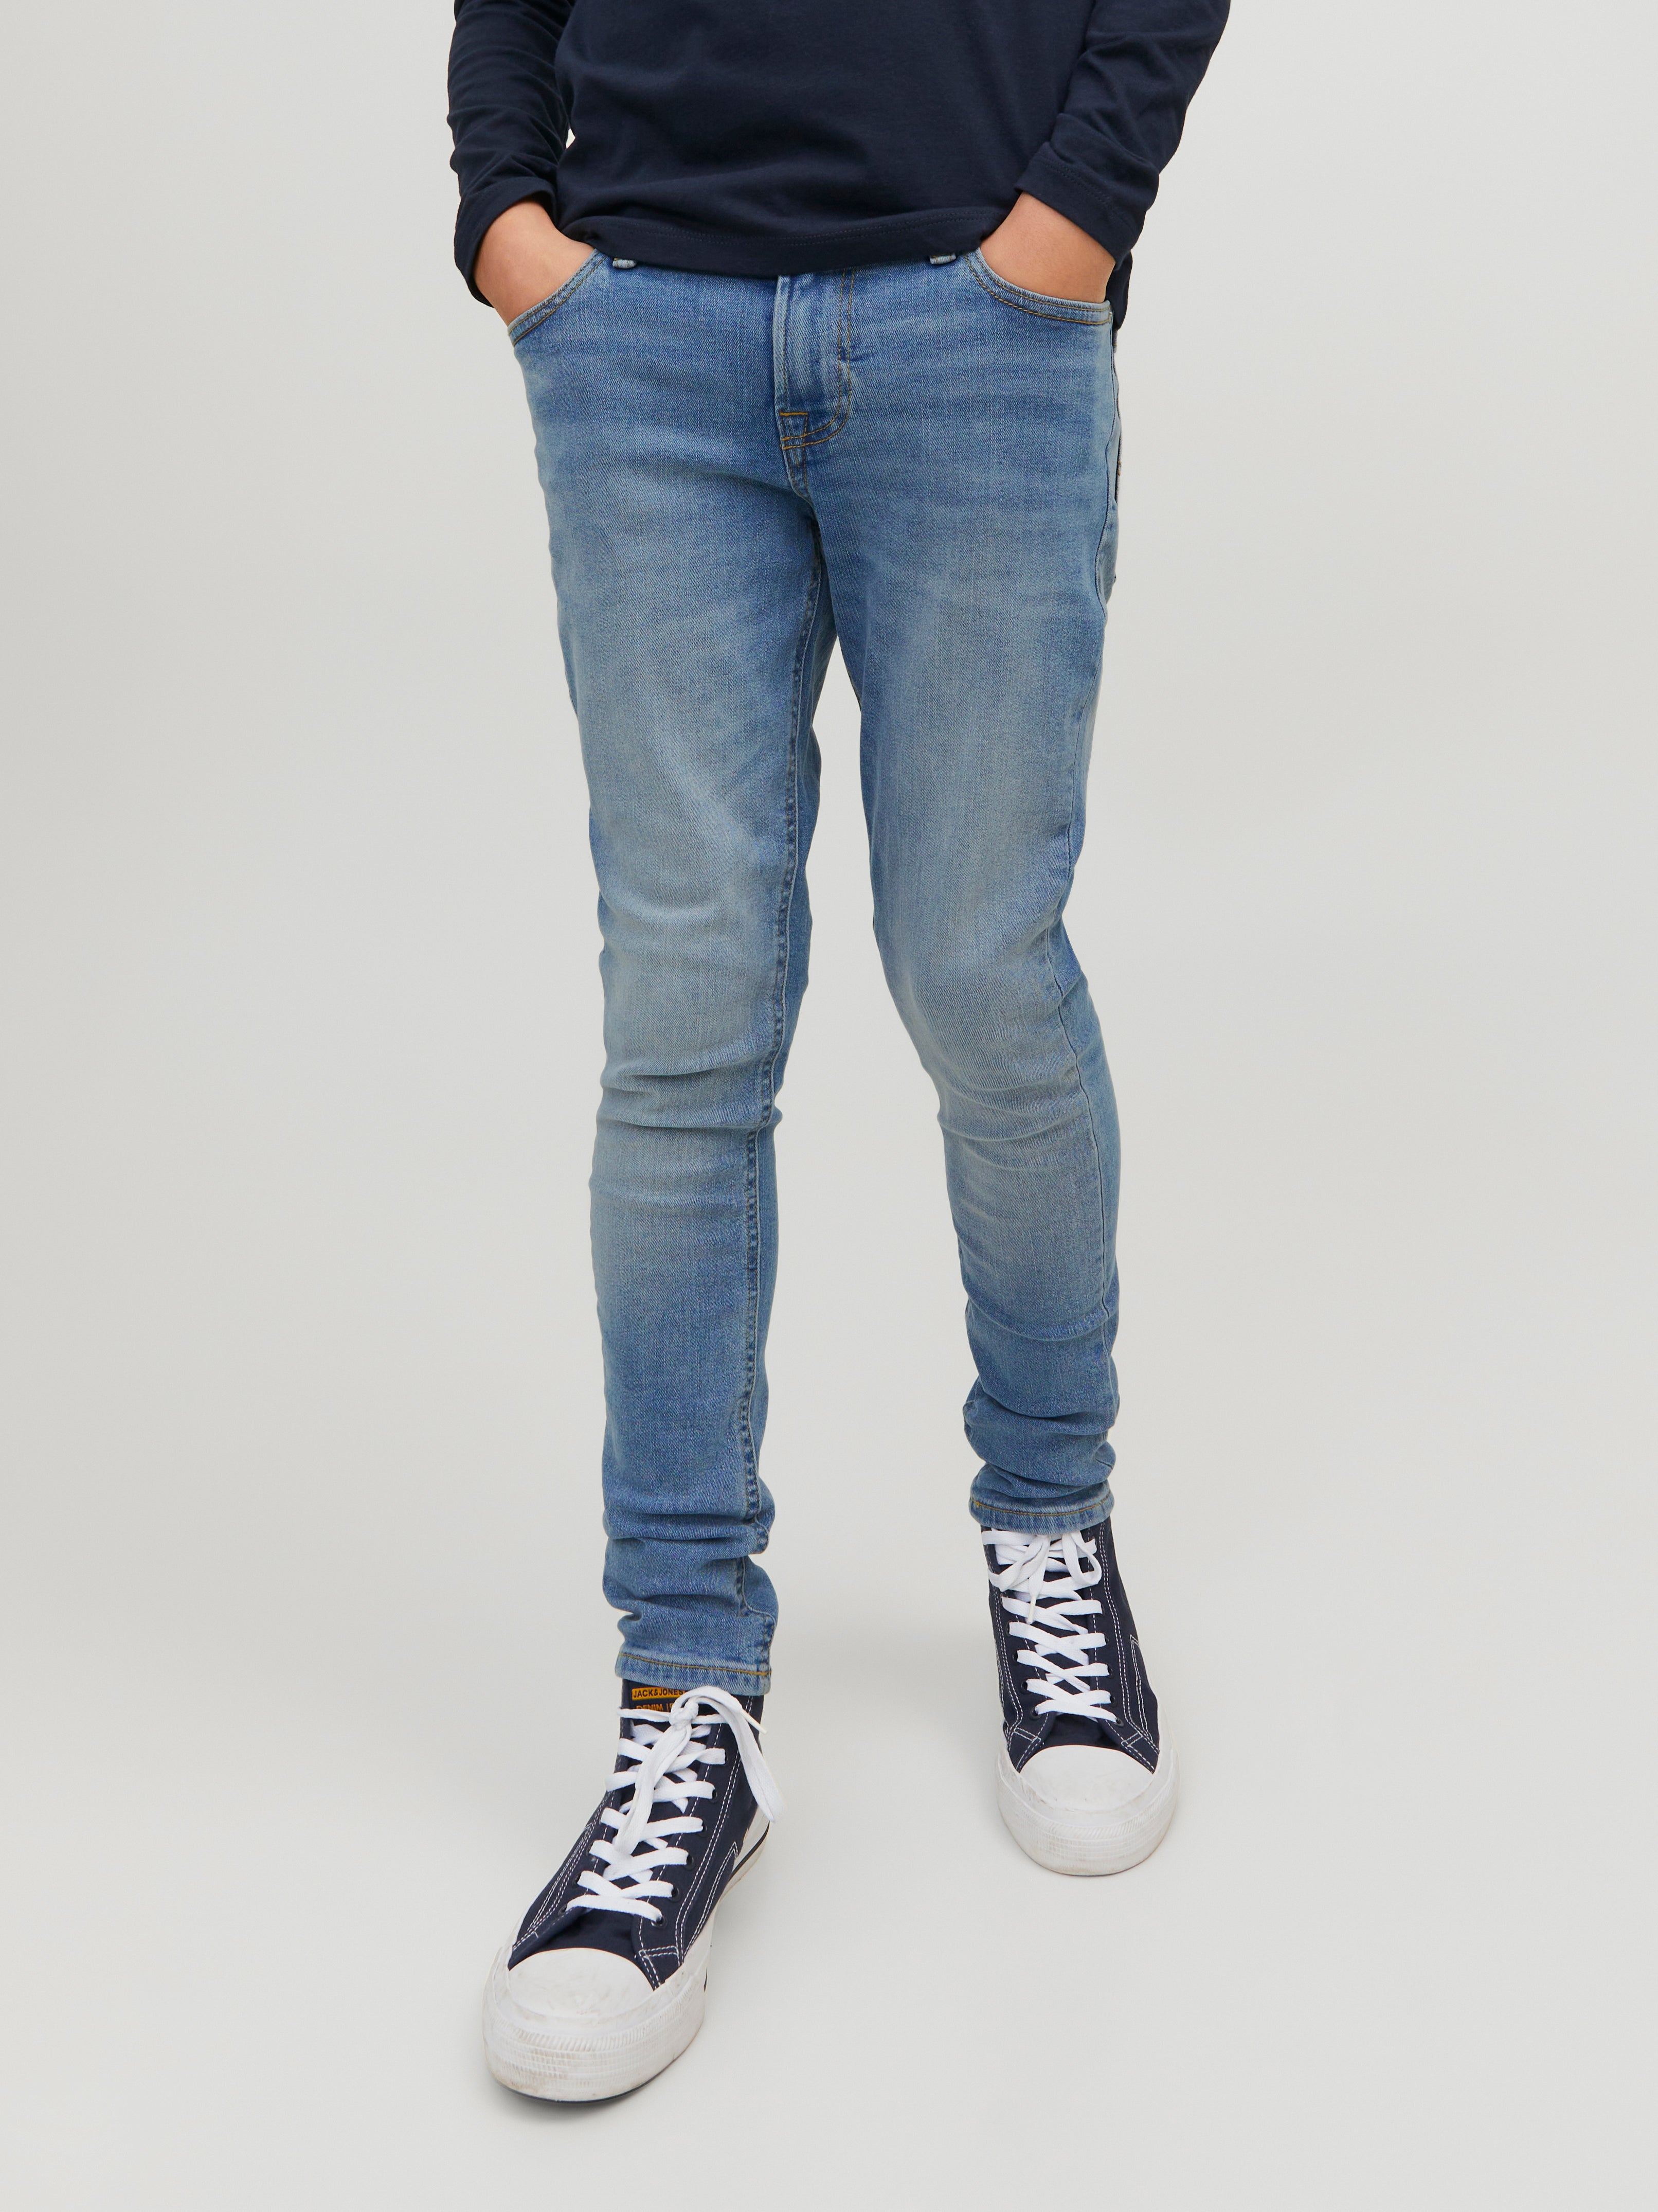 X RAY Skinny Ripped Jeans for Boys – Distressed Slim Fit Denim Pants, Black  - No Rips, Size 8 - Walmart.com